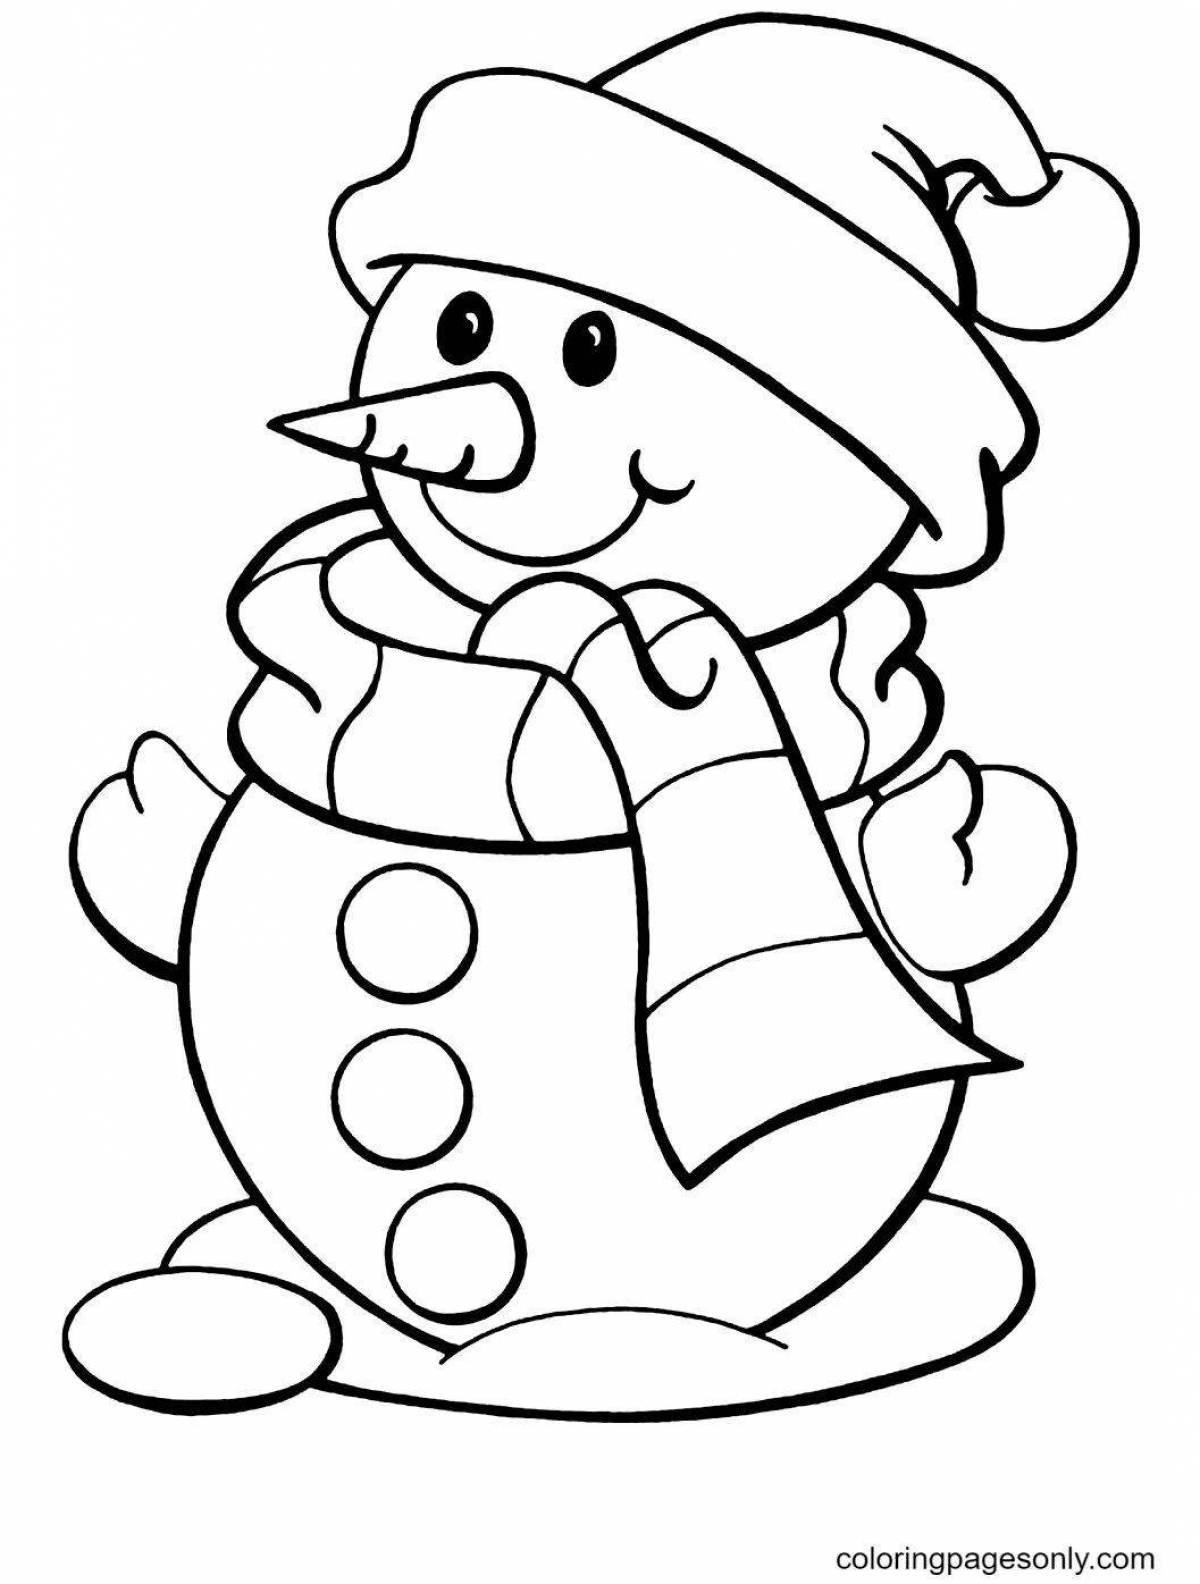 Rampant snowman birthday coloring book